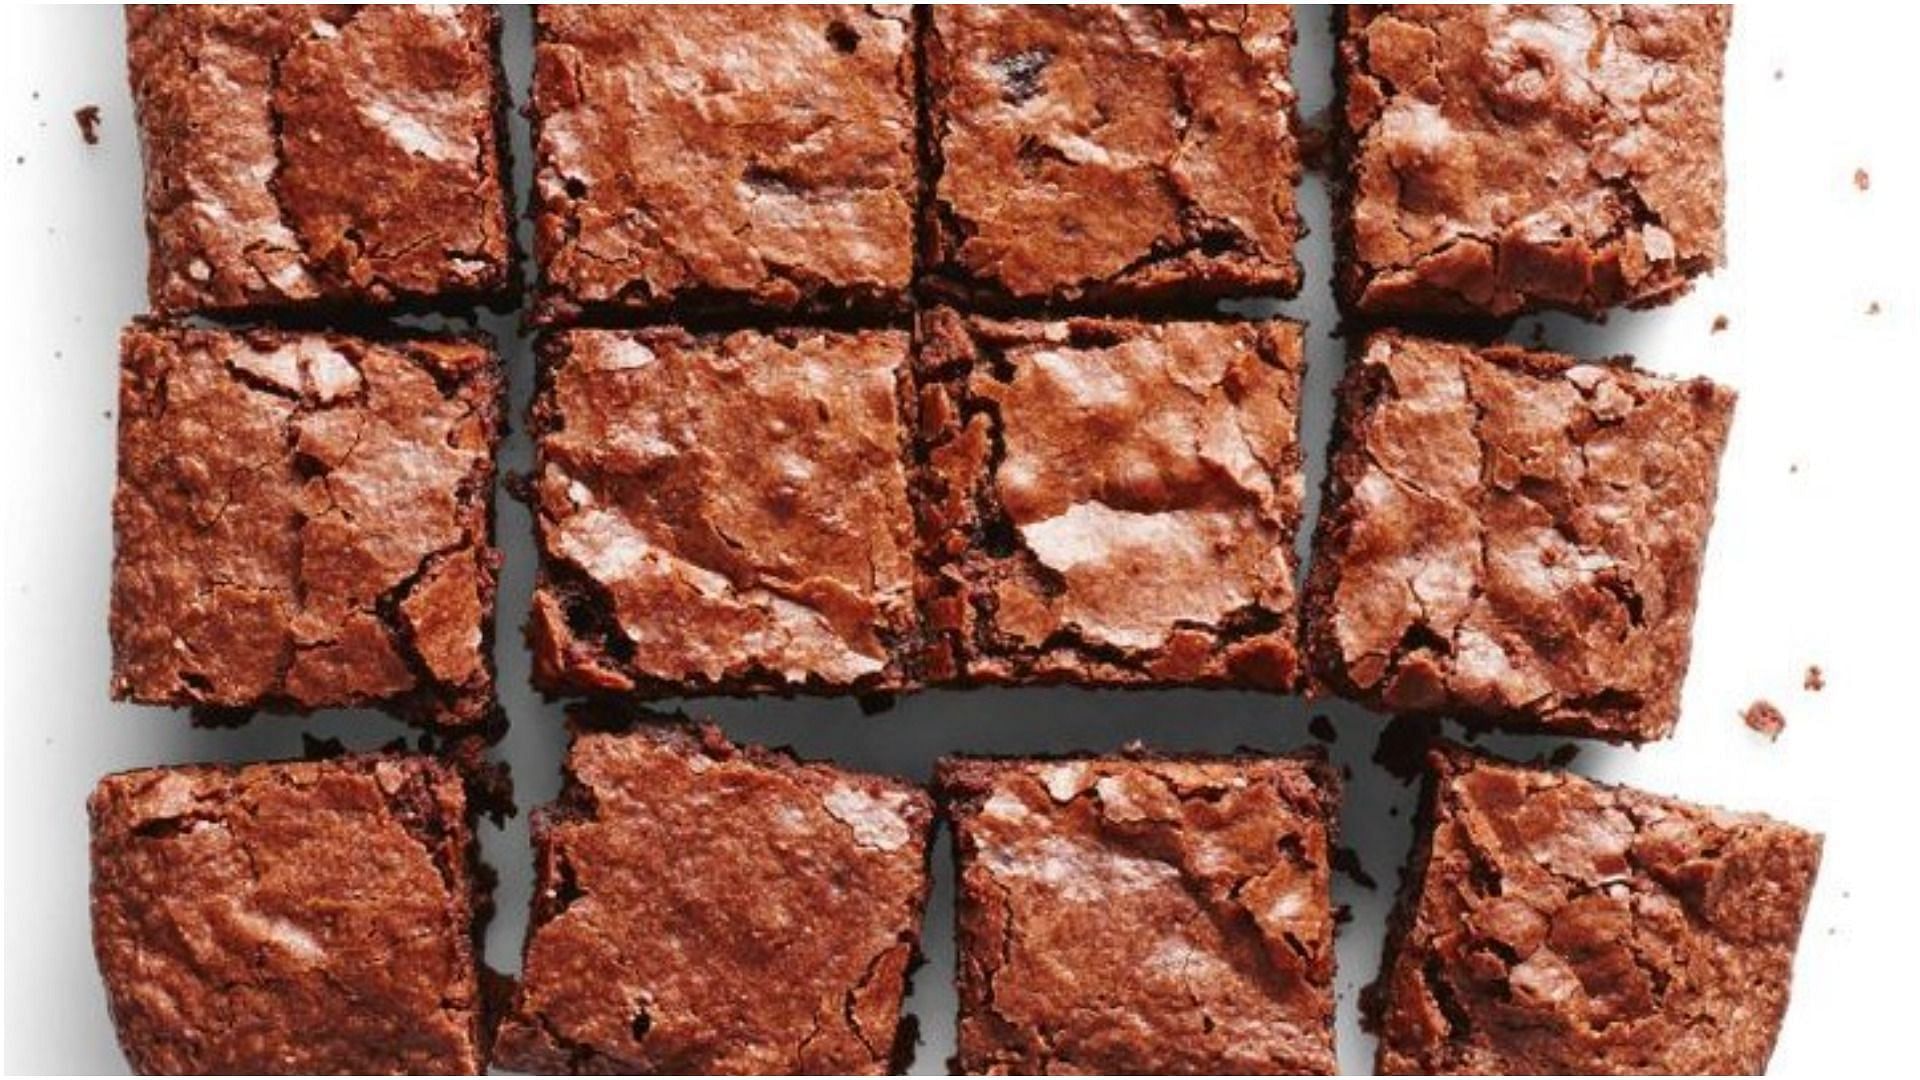 A brownie recipe has taken over the TikTok comments section (Image via taste.com.au)